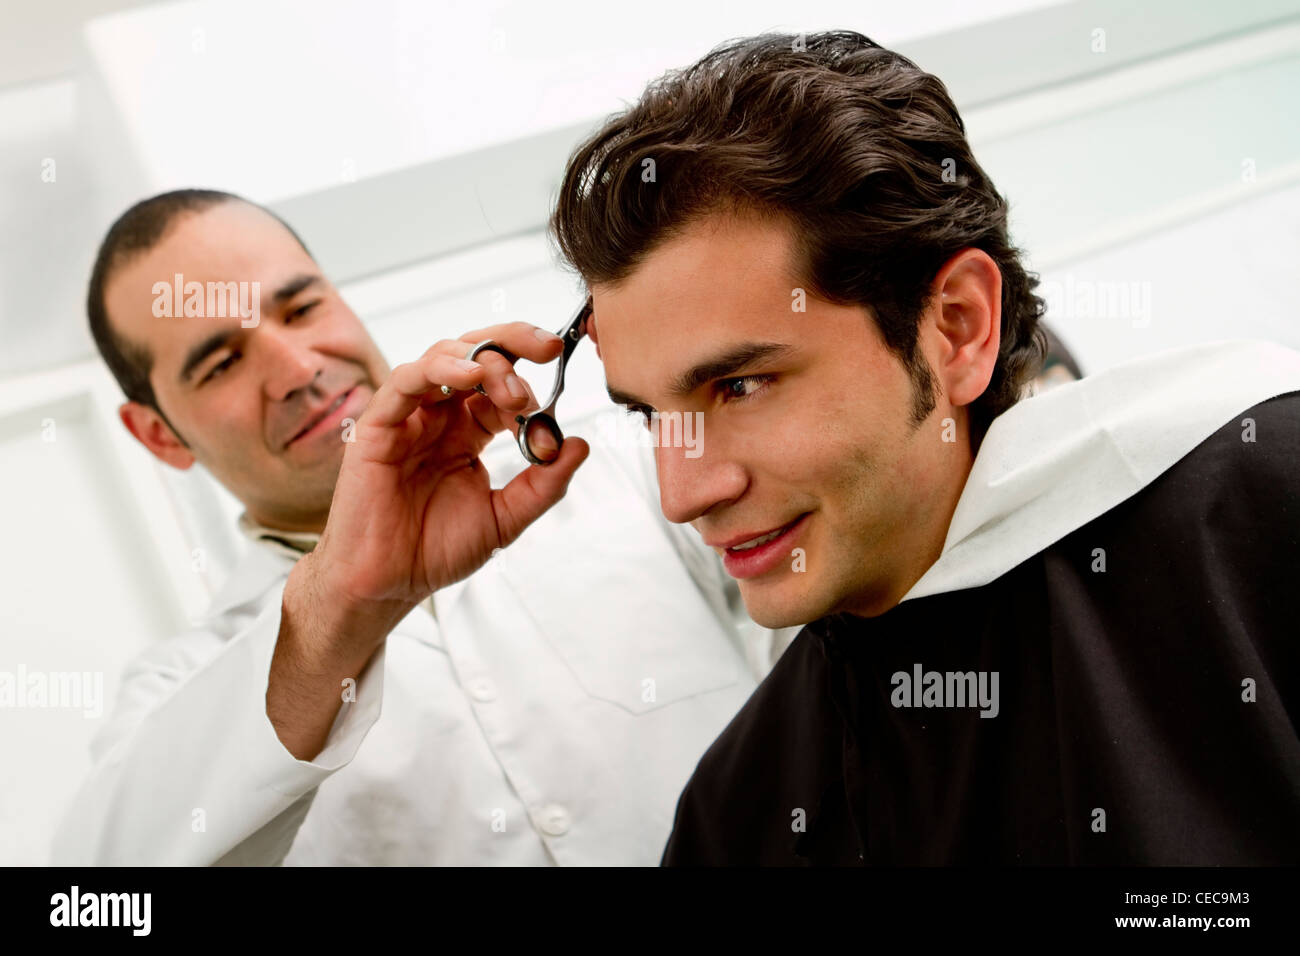 Hispanic man having hair cut in barber shop Stock Photo